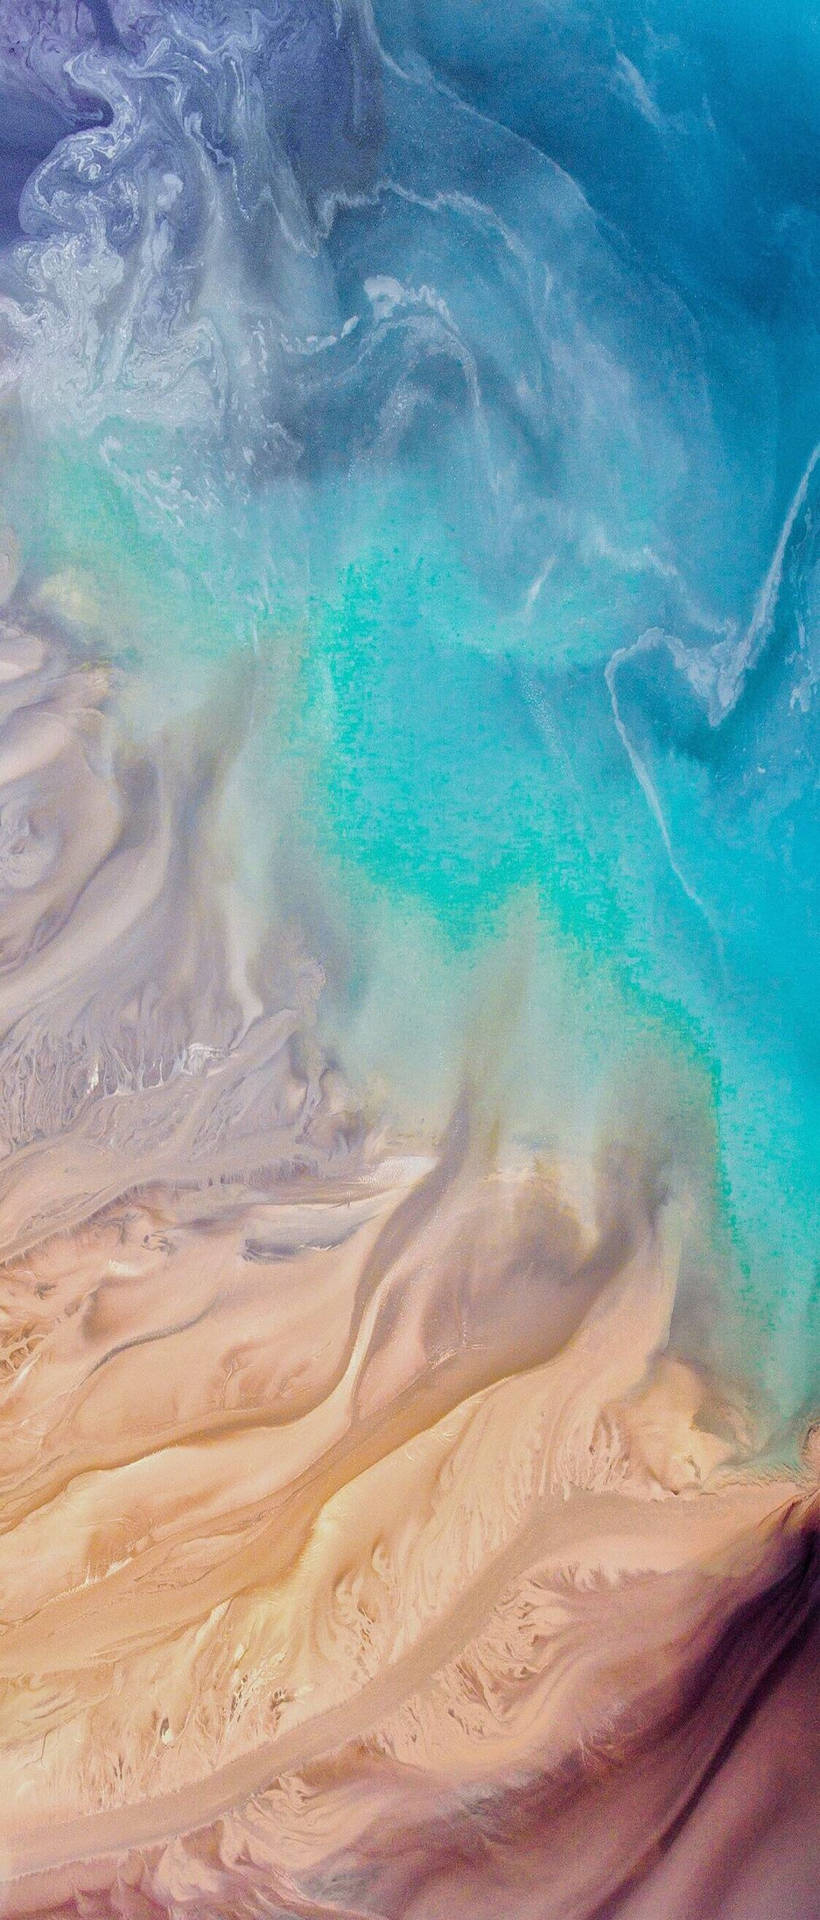 iPhone X Beach Leeching Waves Wallpaper